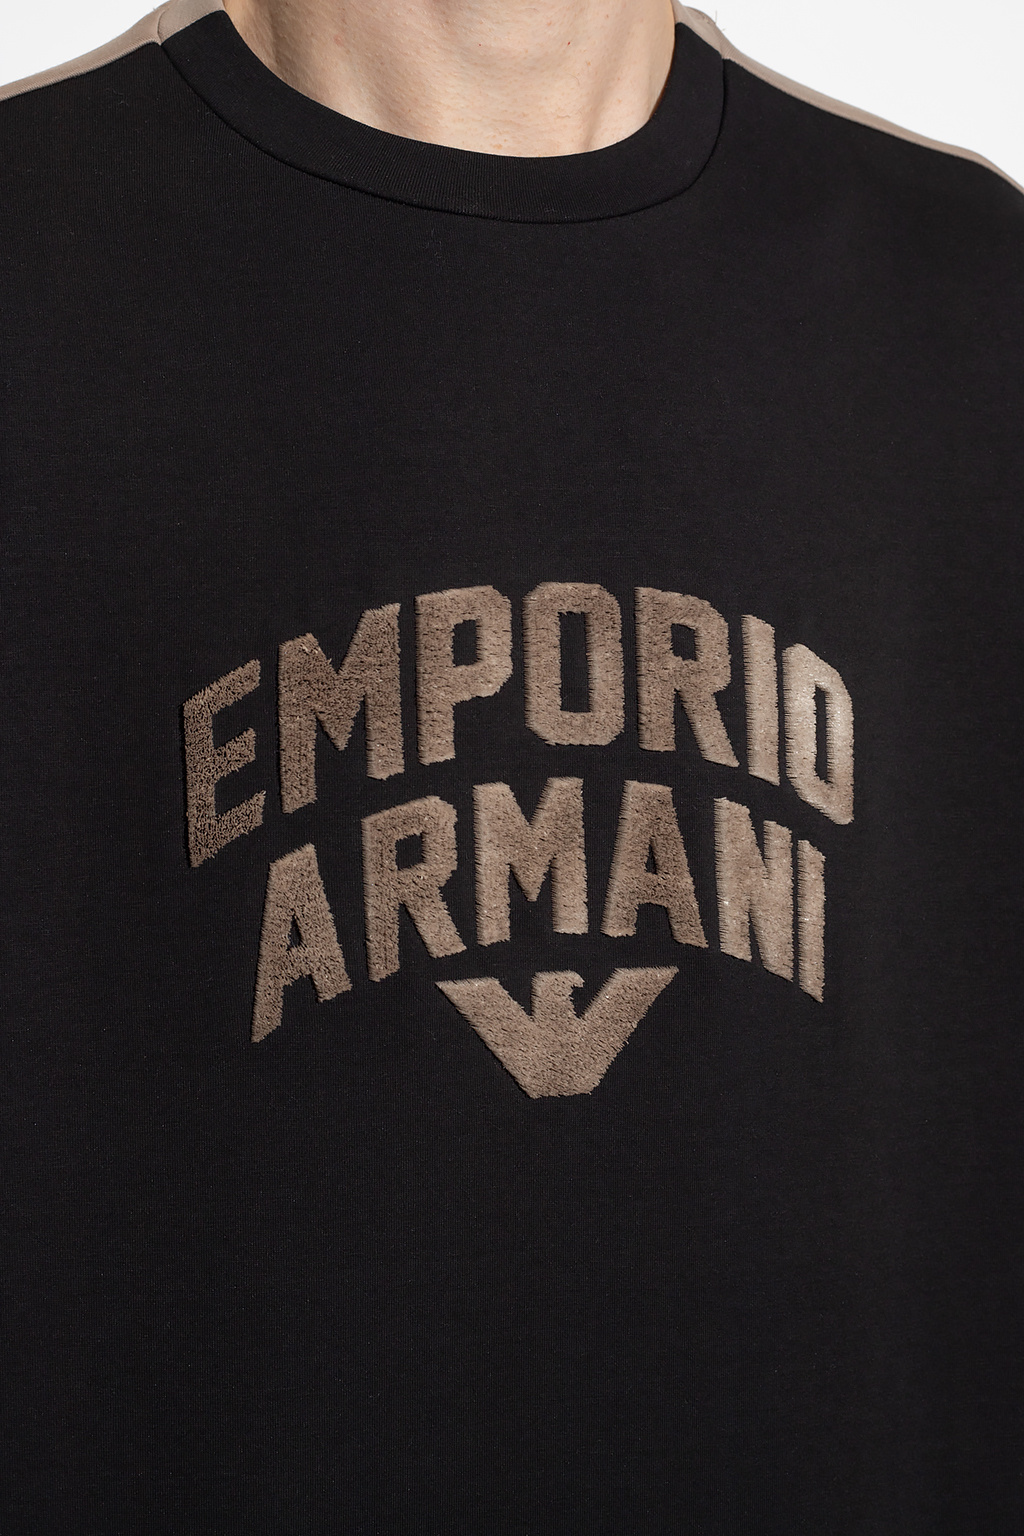 Emporio Gurung armani Sweatshirt with logo